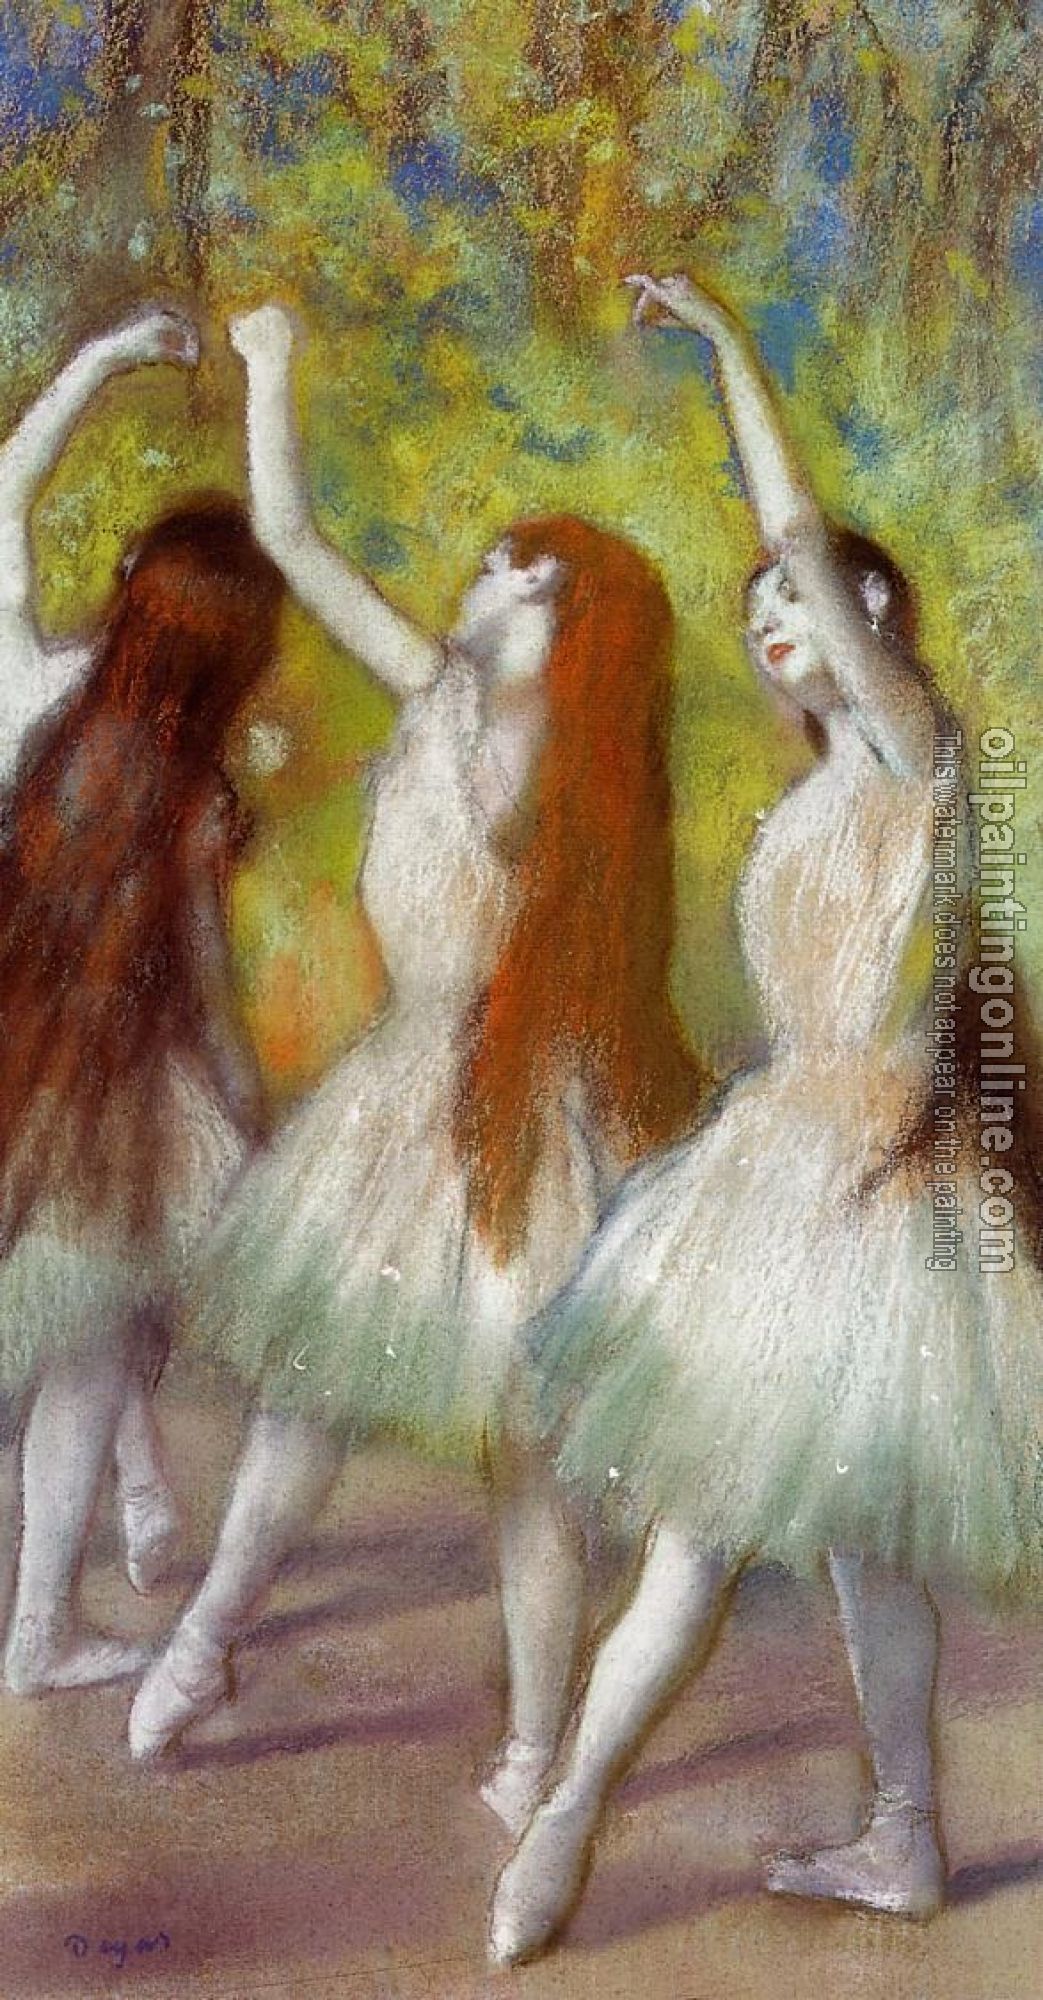 Degas, Edgar - Dancers in Green